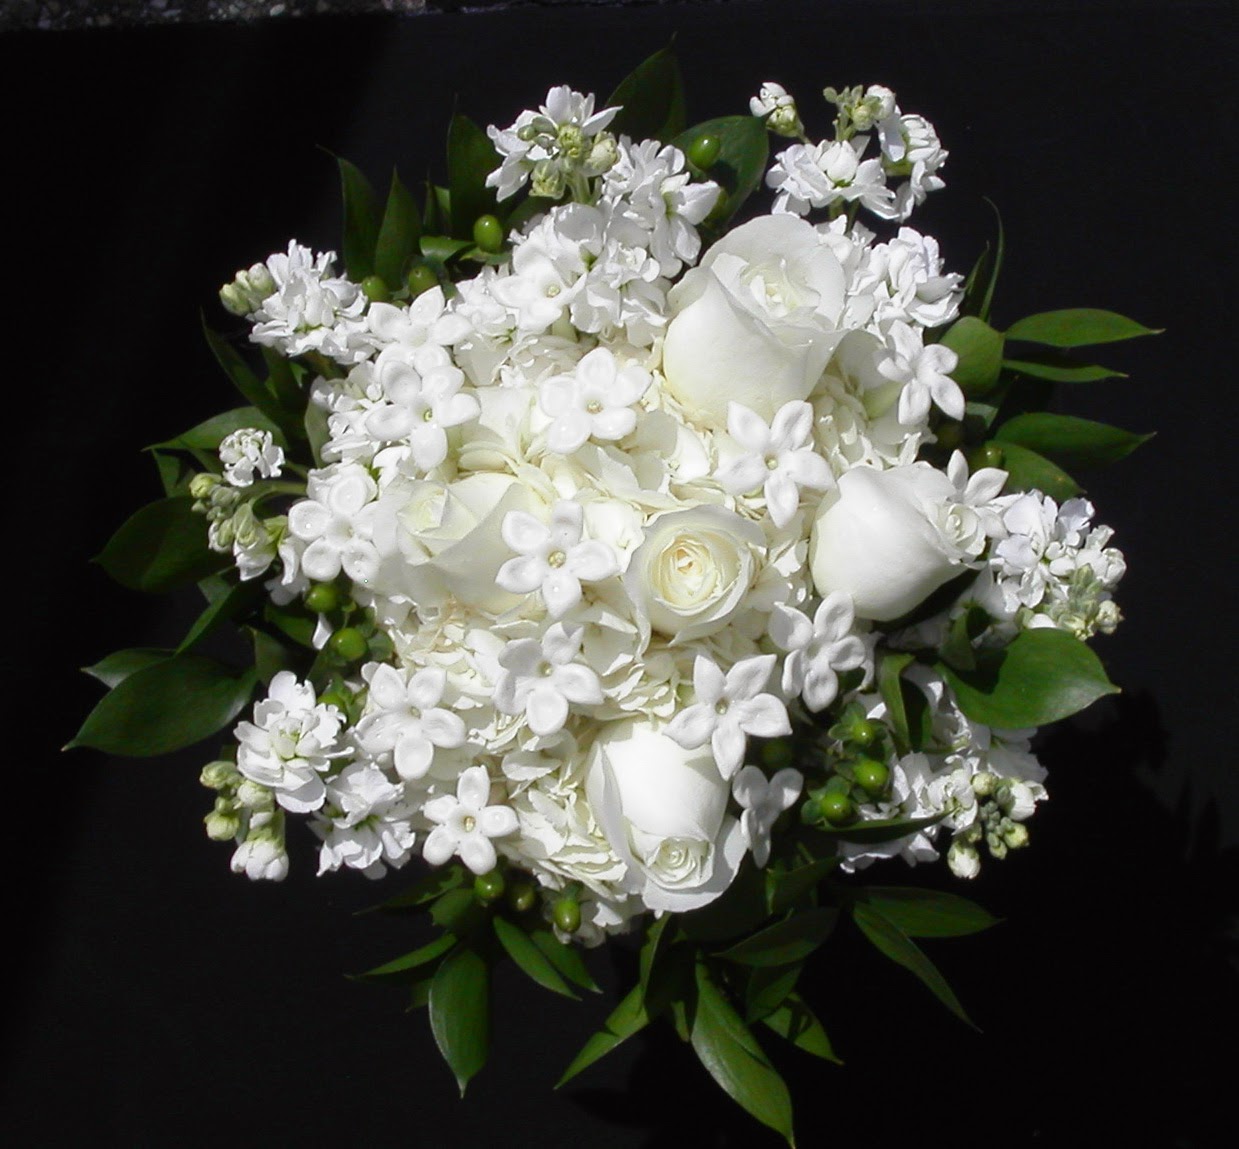 Kumpulan Gambar Bunga Mawar Putih yang Cantik Indah Blog 